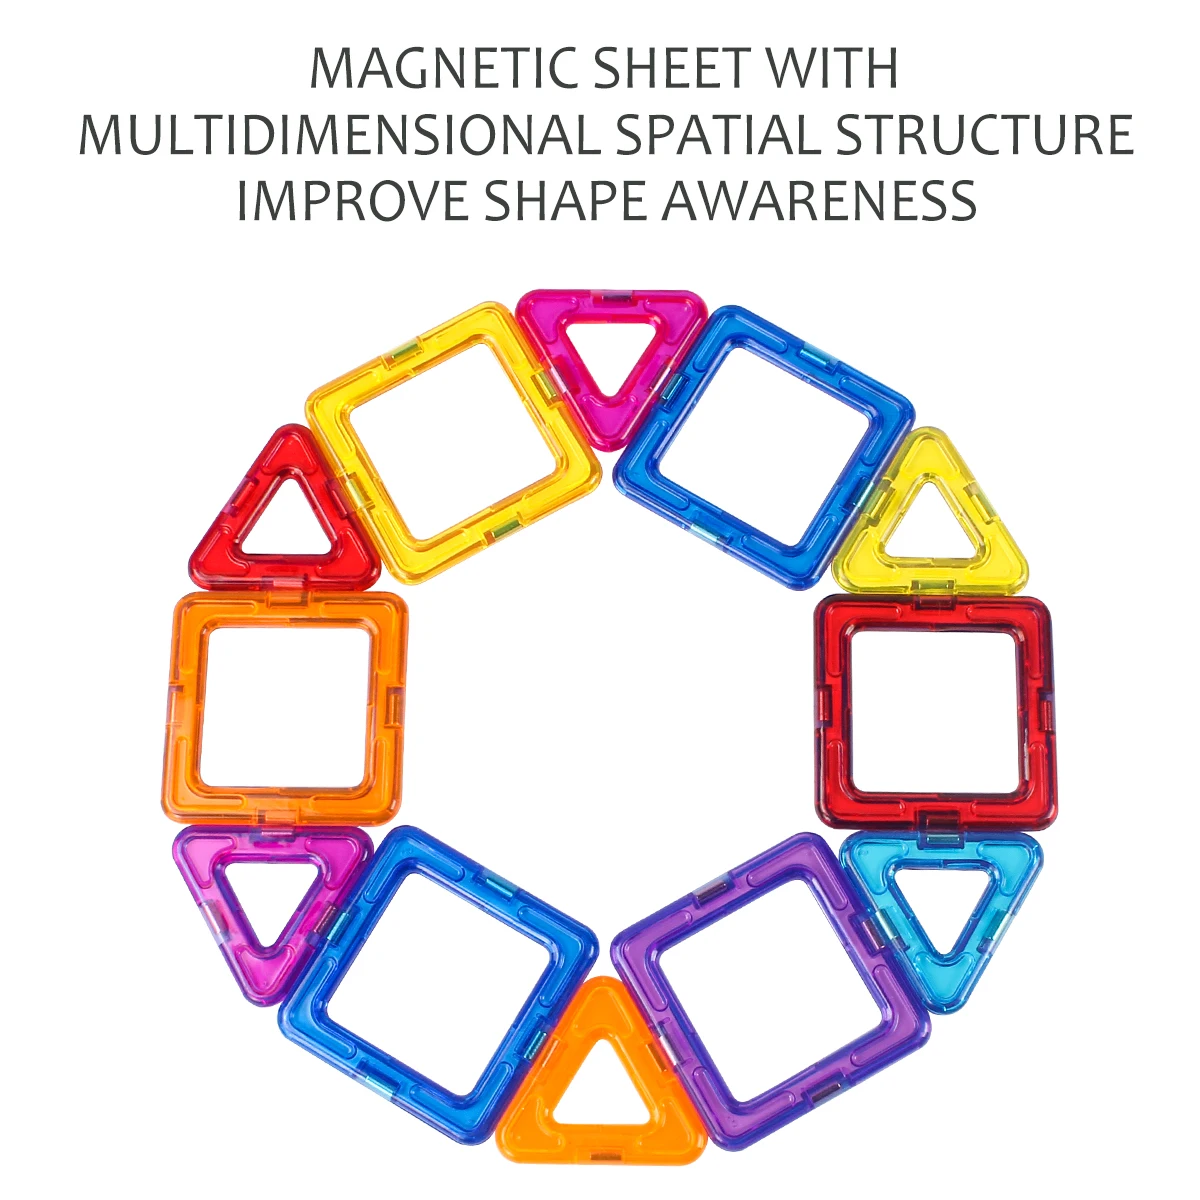 
Amazon Hot Selling 84pcs Magnet Building Tiles Magnetic Building Block Sets Diy Construction Magnetic Toys 